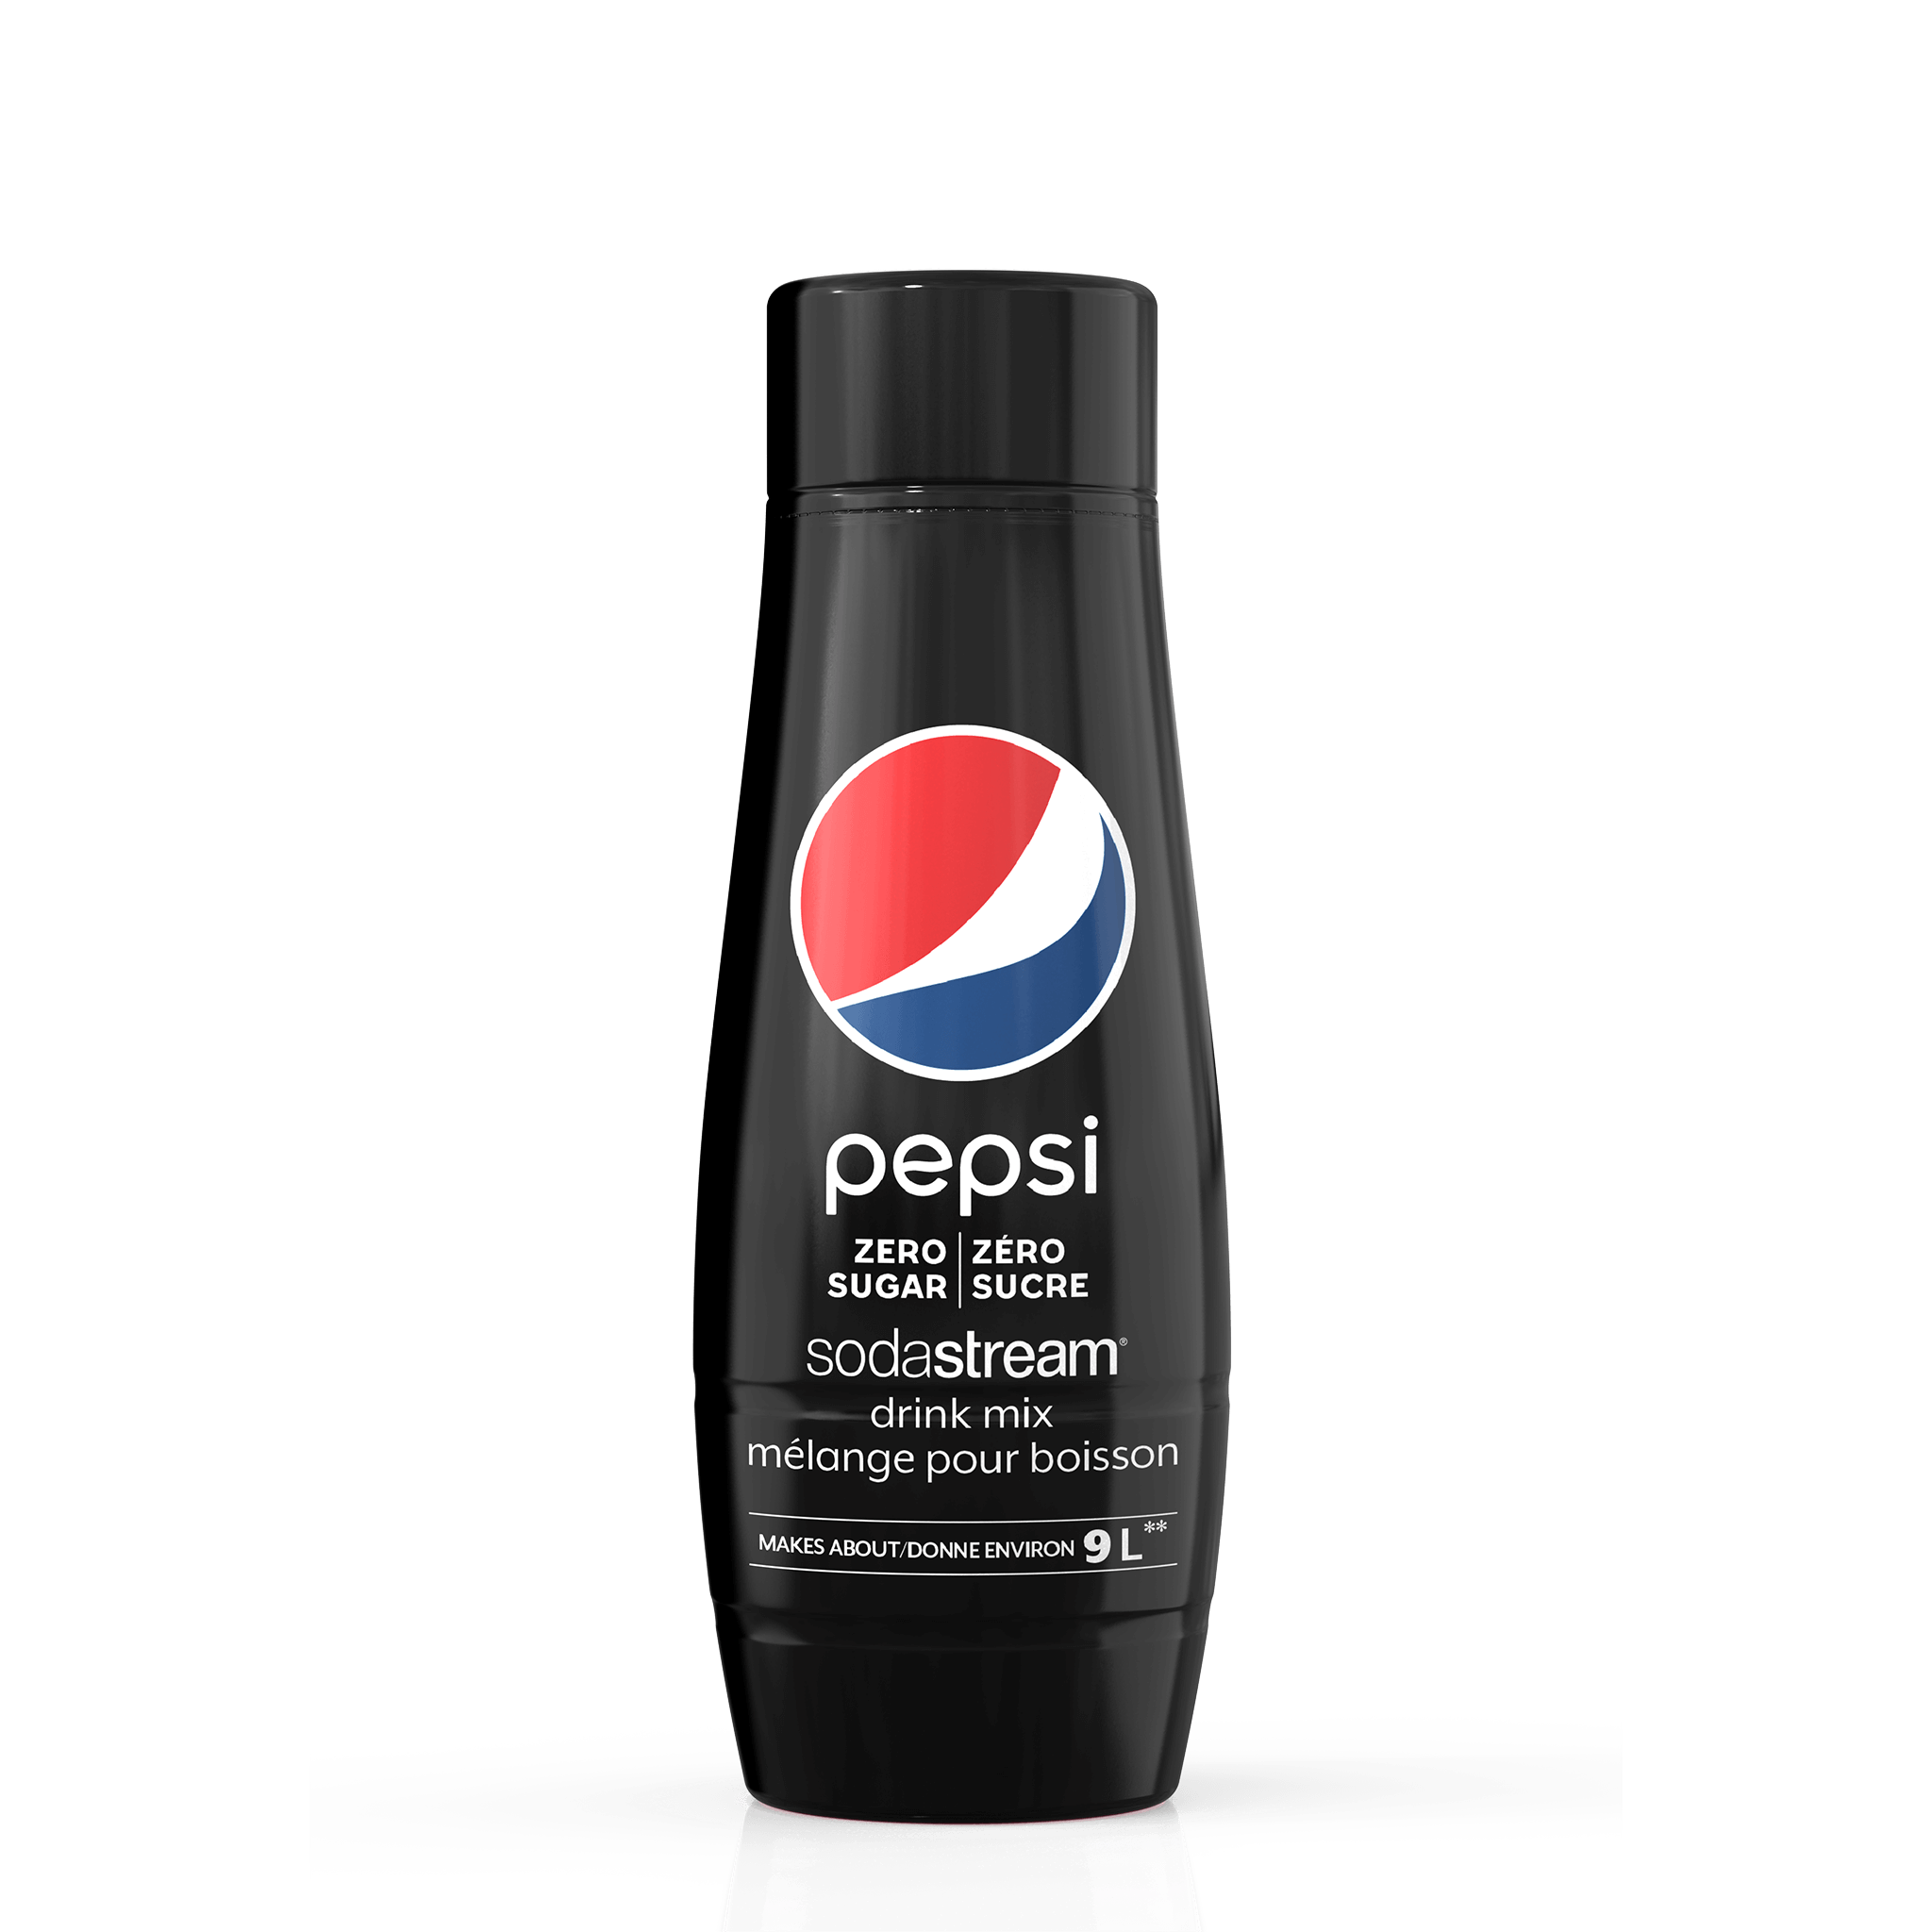 Pepsi Zero Sugar sodastream